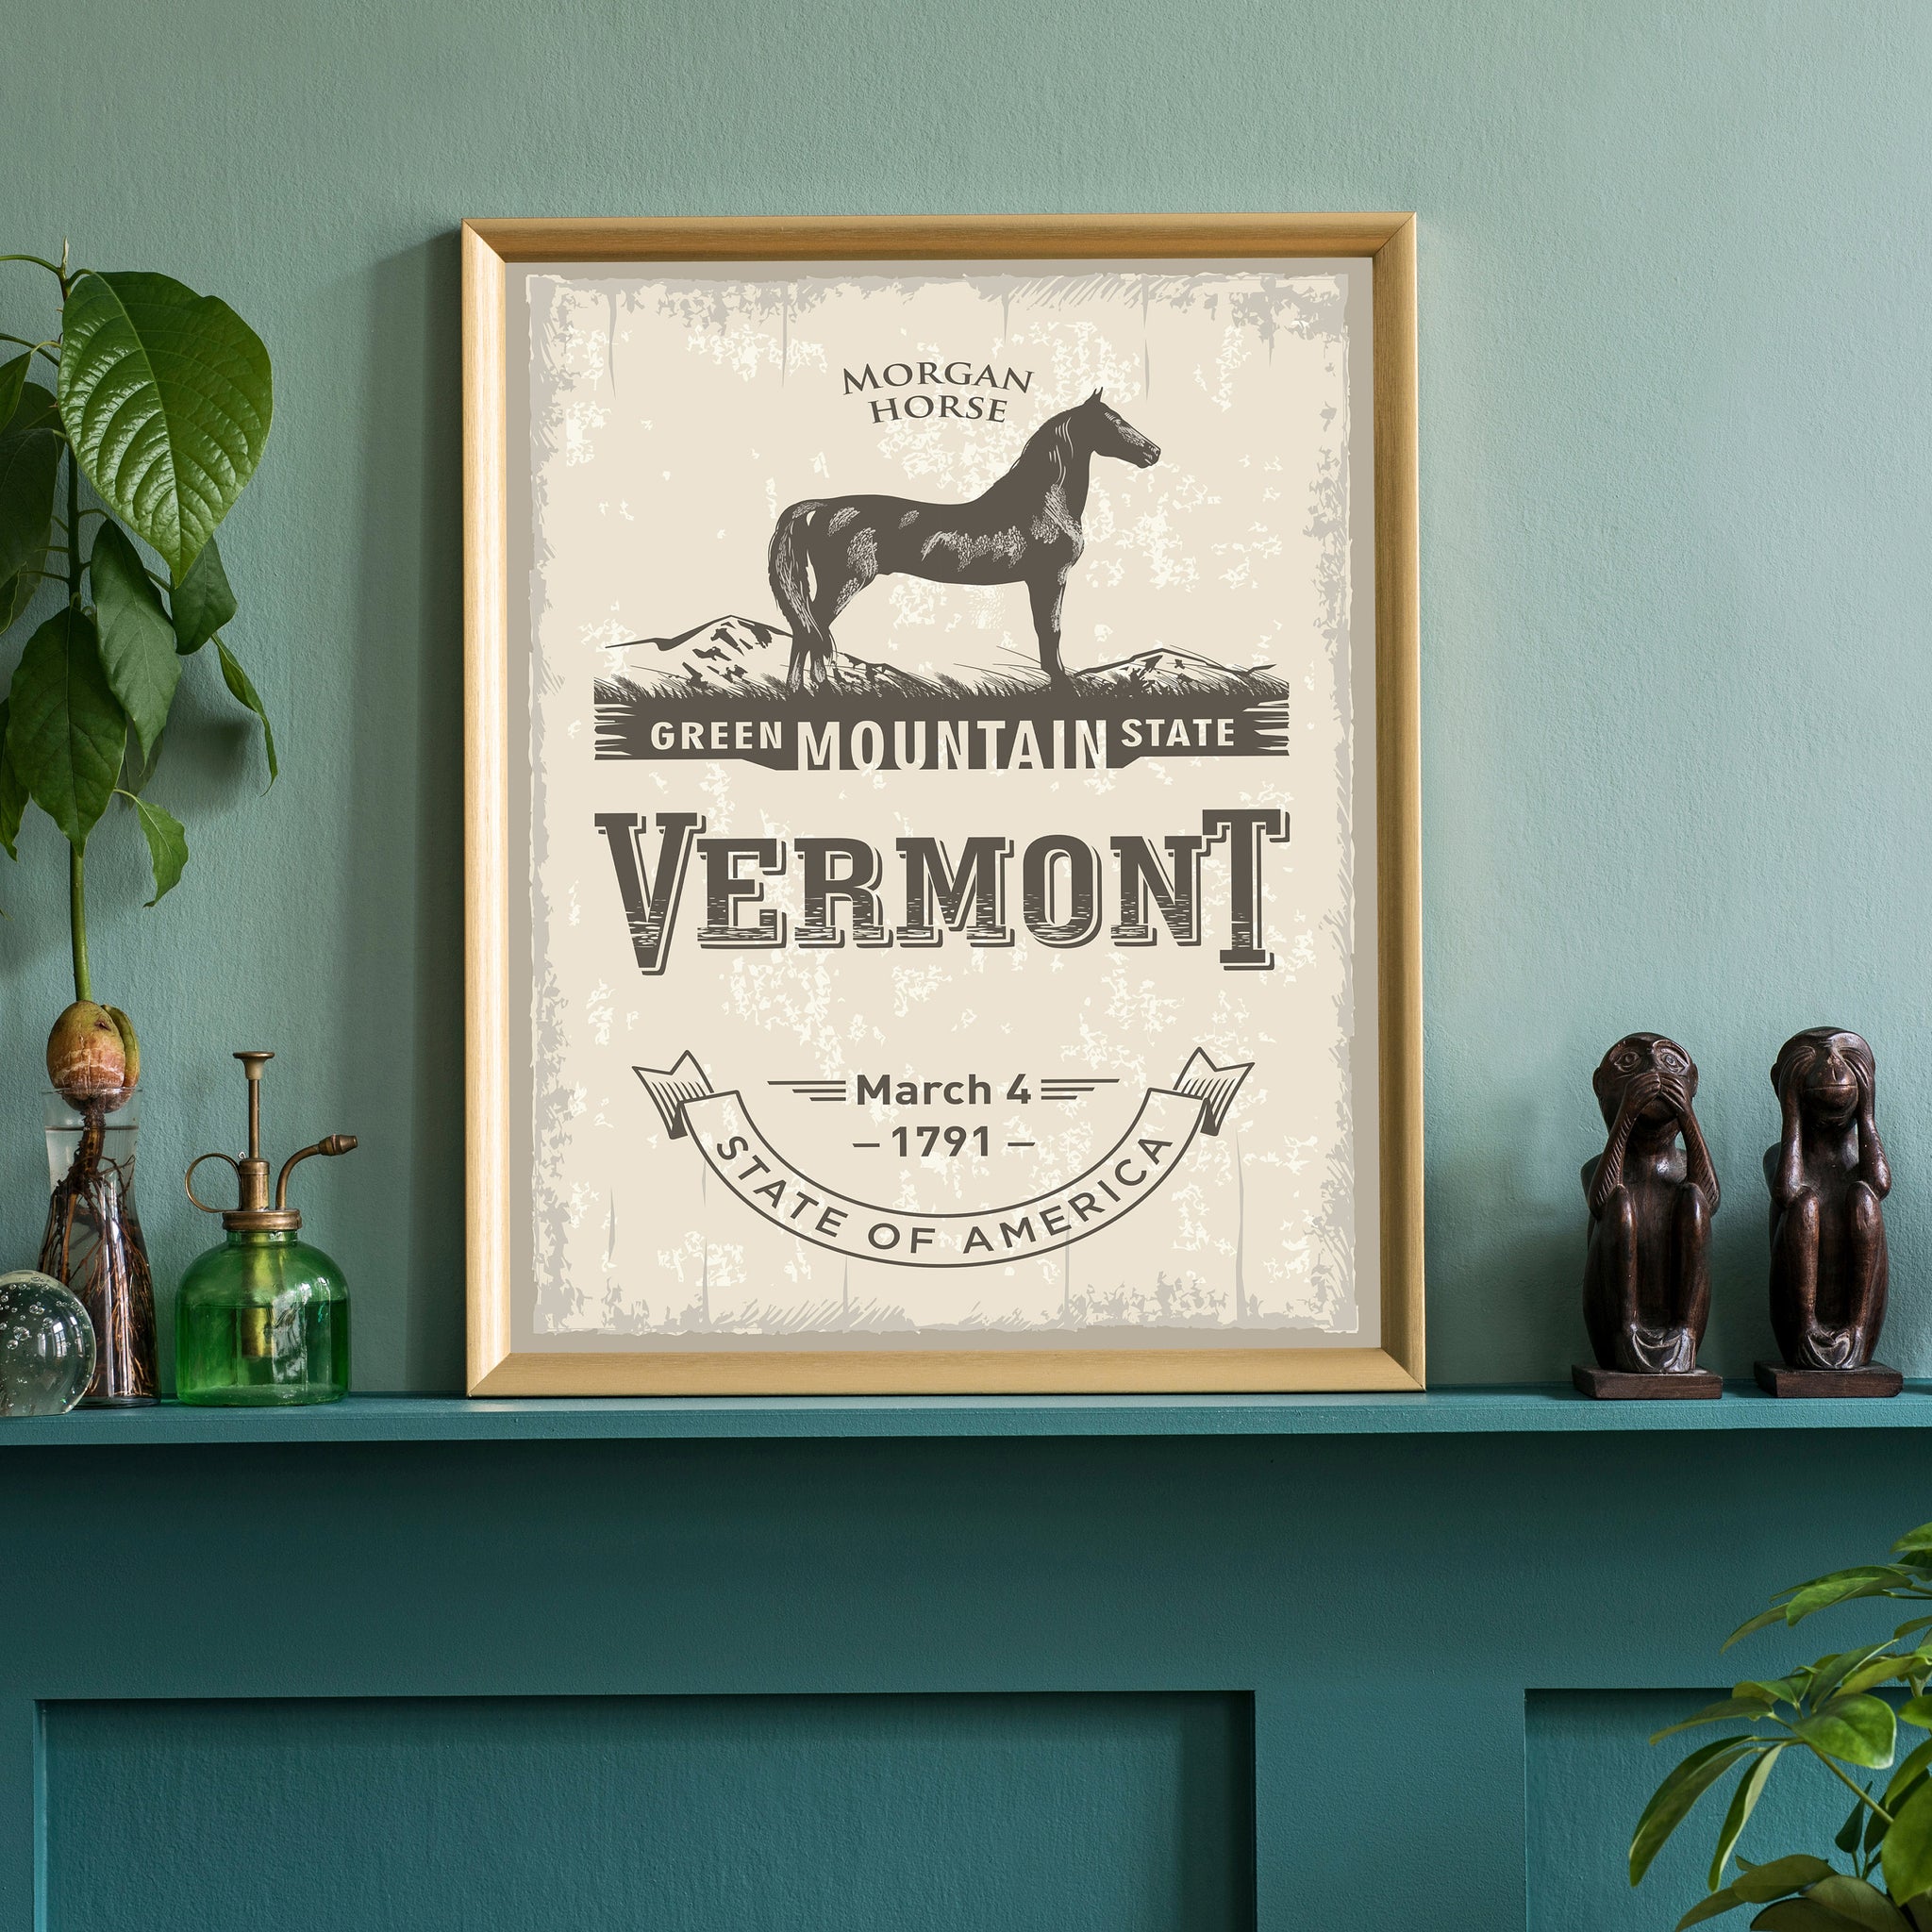 VERMONT state Morgan Horse symbol Poster, Green mountain state poster print, Vermont state emblem poster, Retro travel states poster print